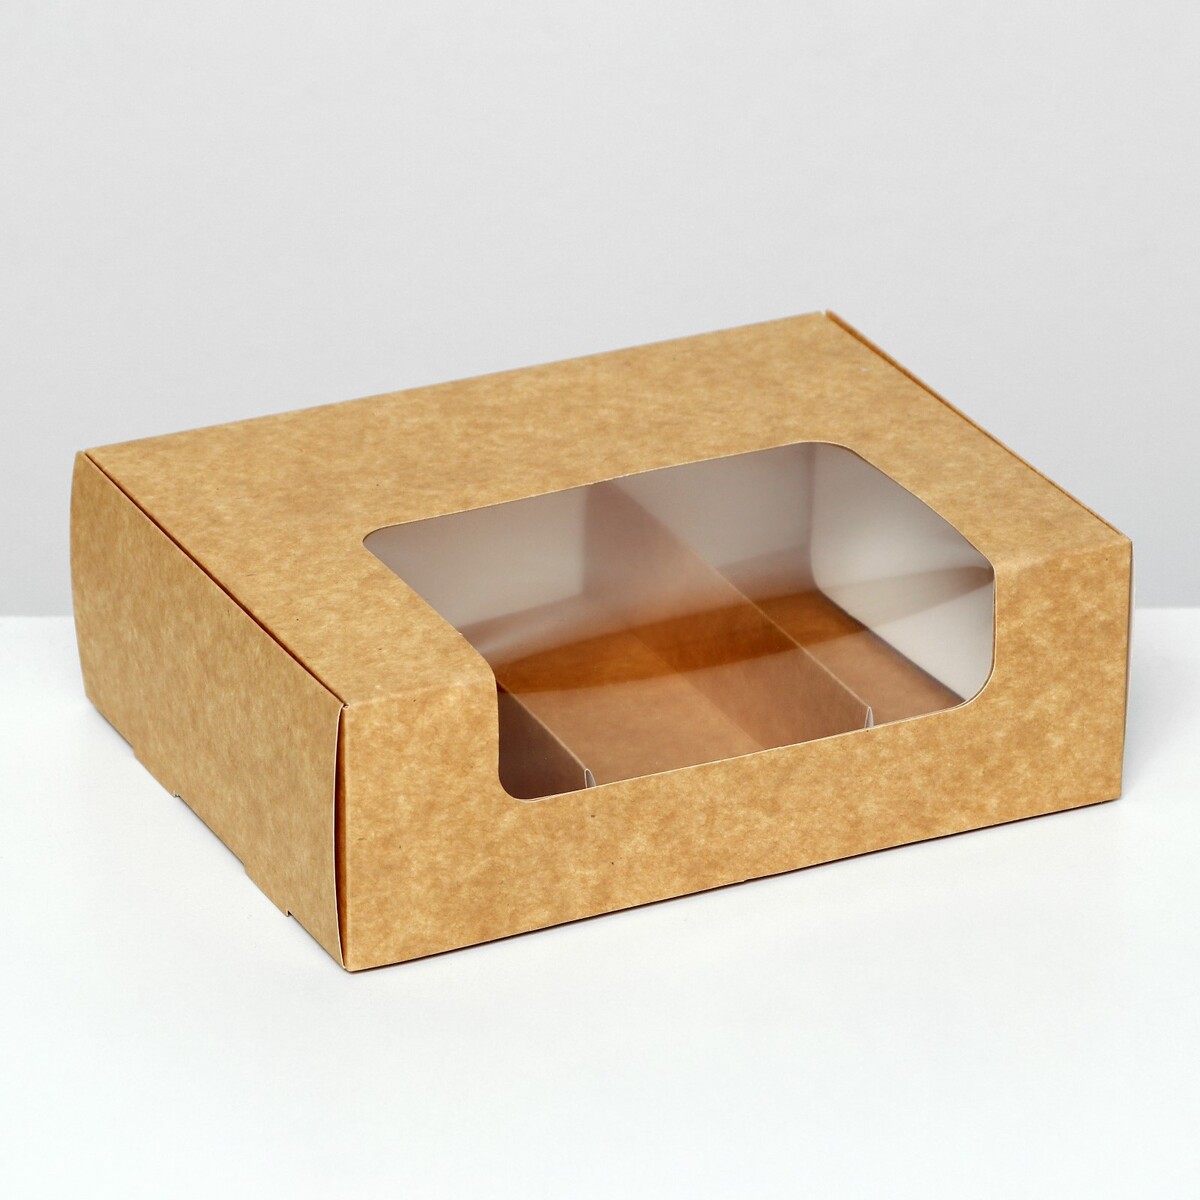 Коробка складная, под 3 эклера, крафт, 20 x 15 x 6 см коробка складная под 12 конфет крафт 19 х 15 х 3 6 см